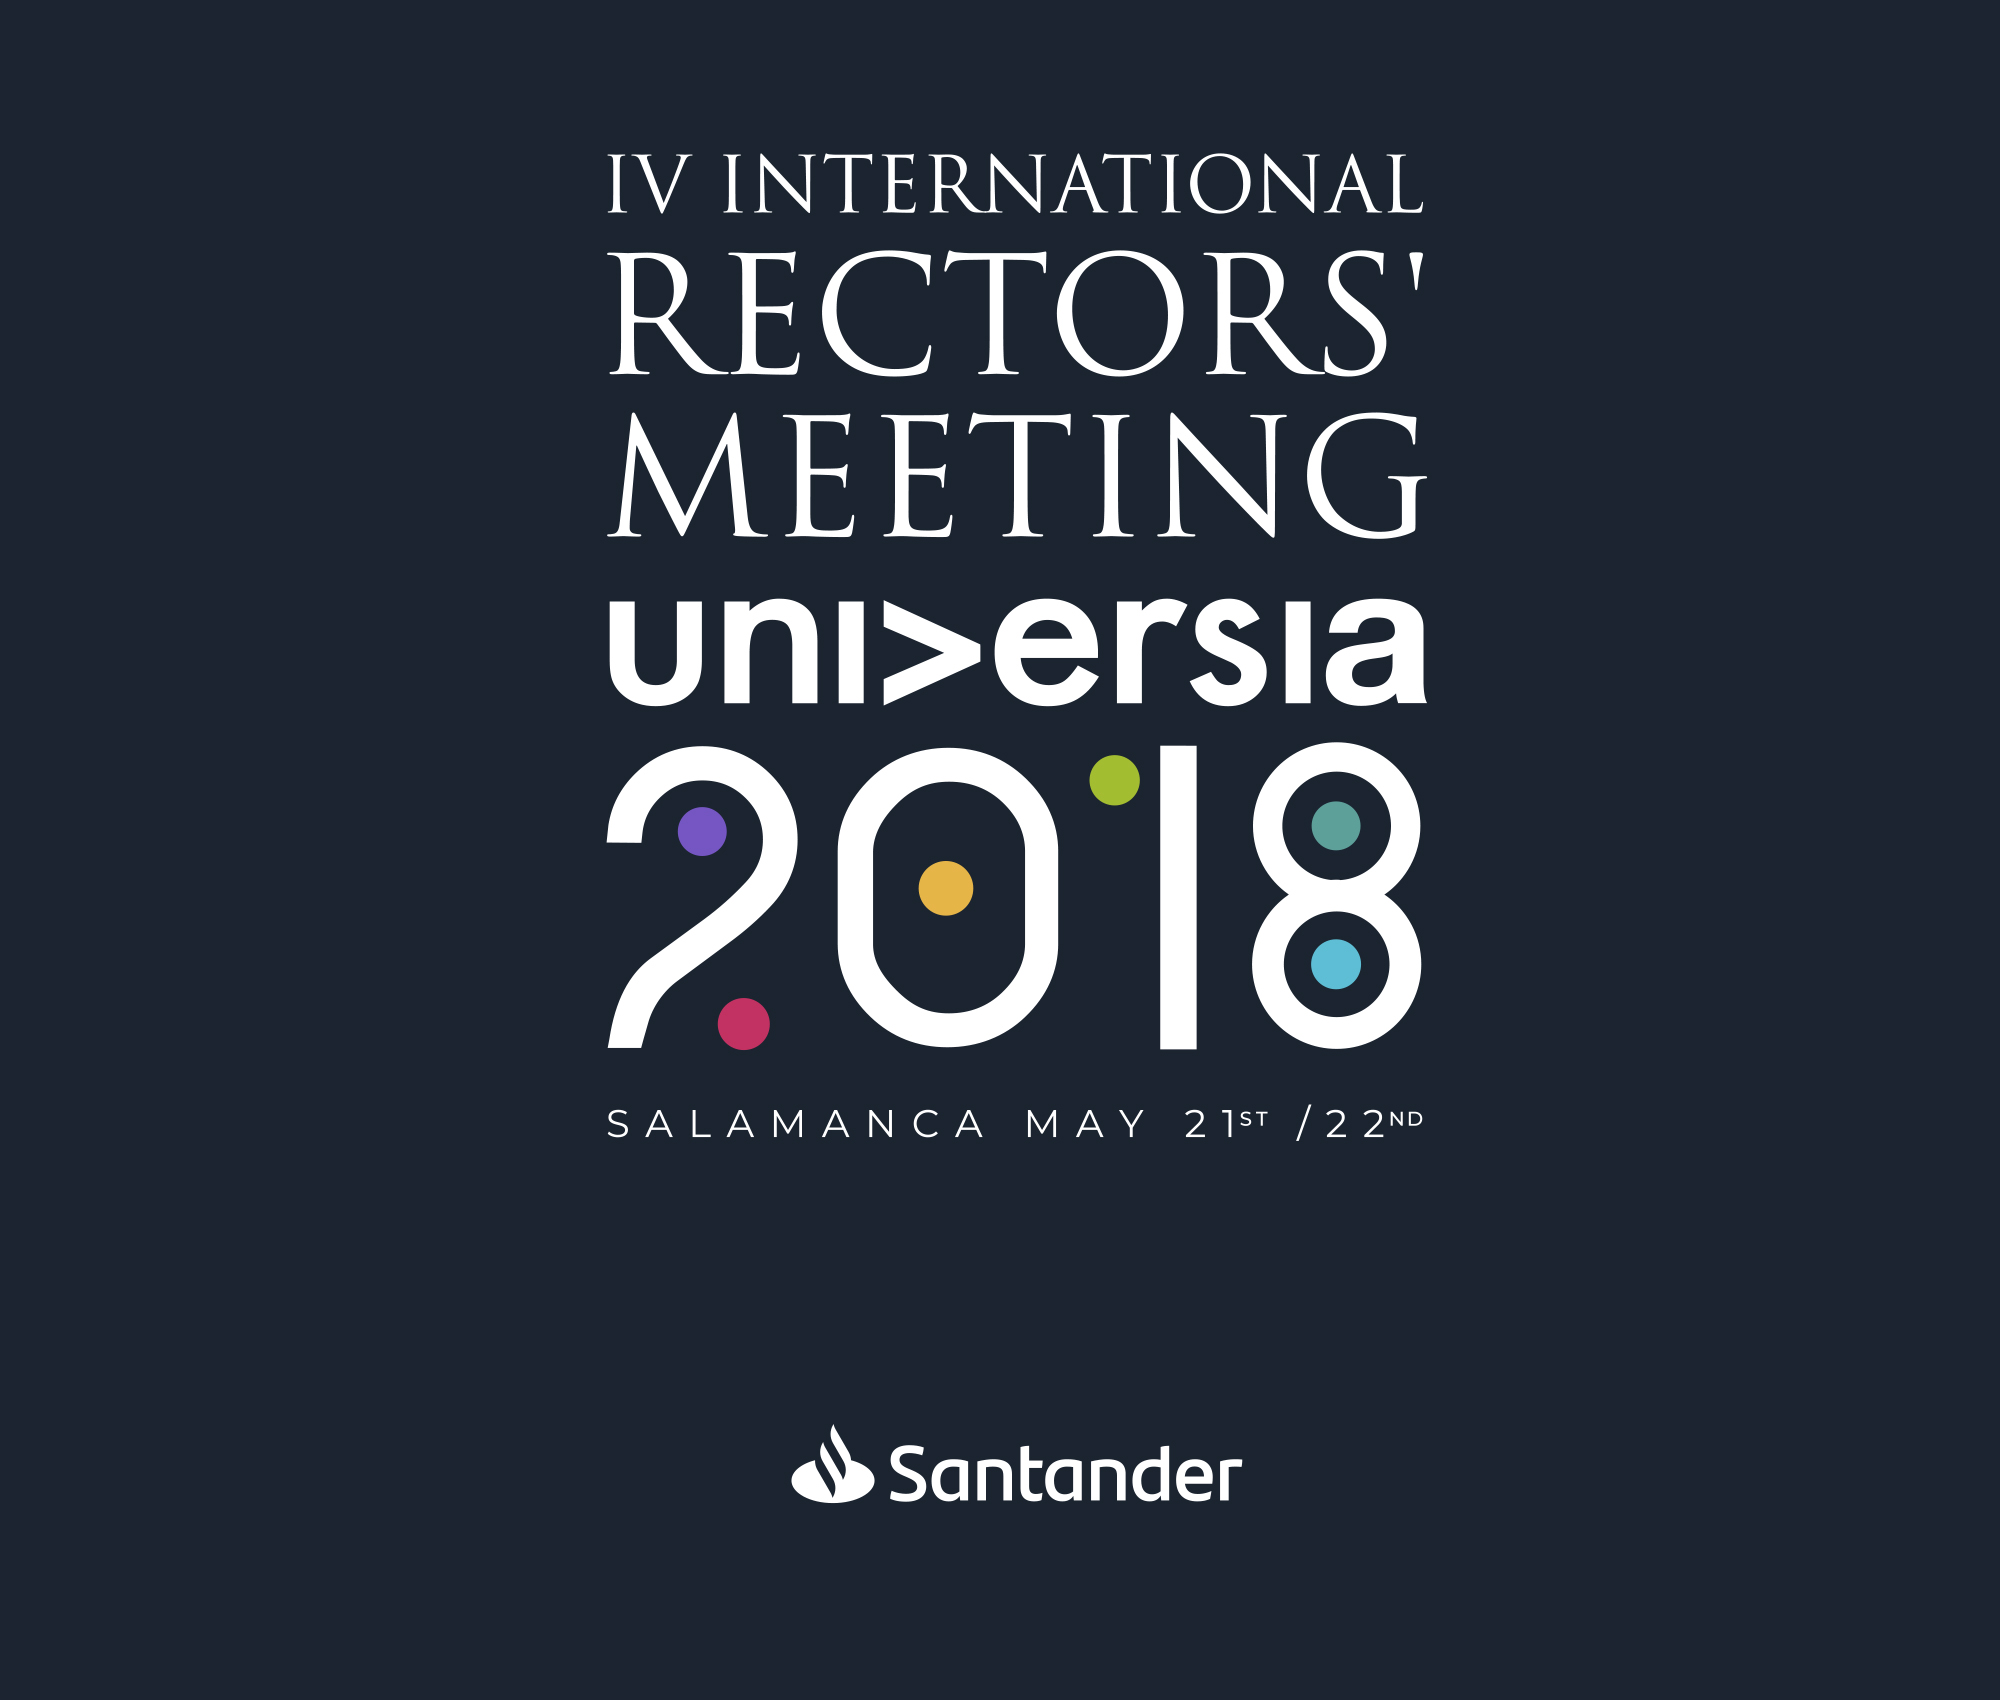  IV International Rectors' Meeting Universia 2018